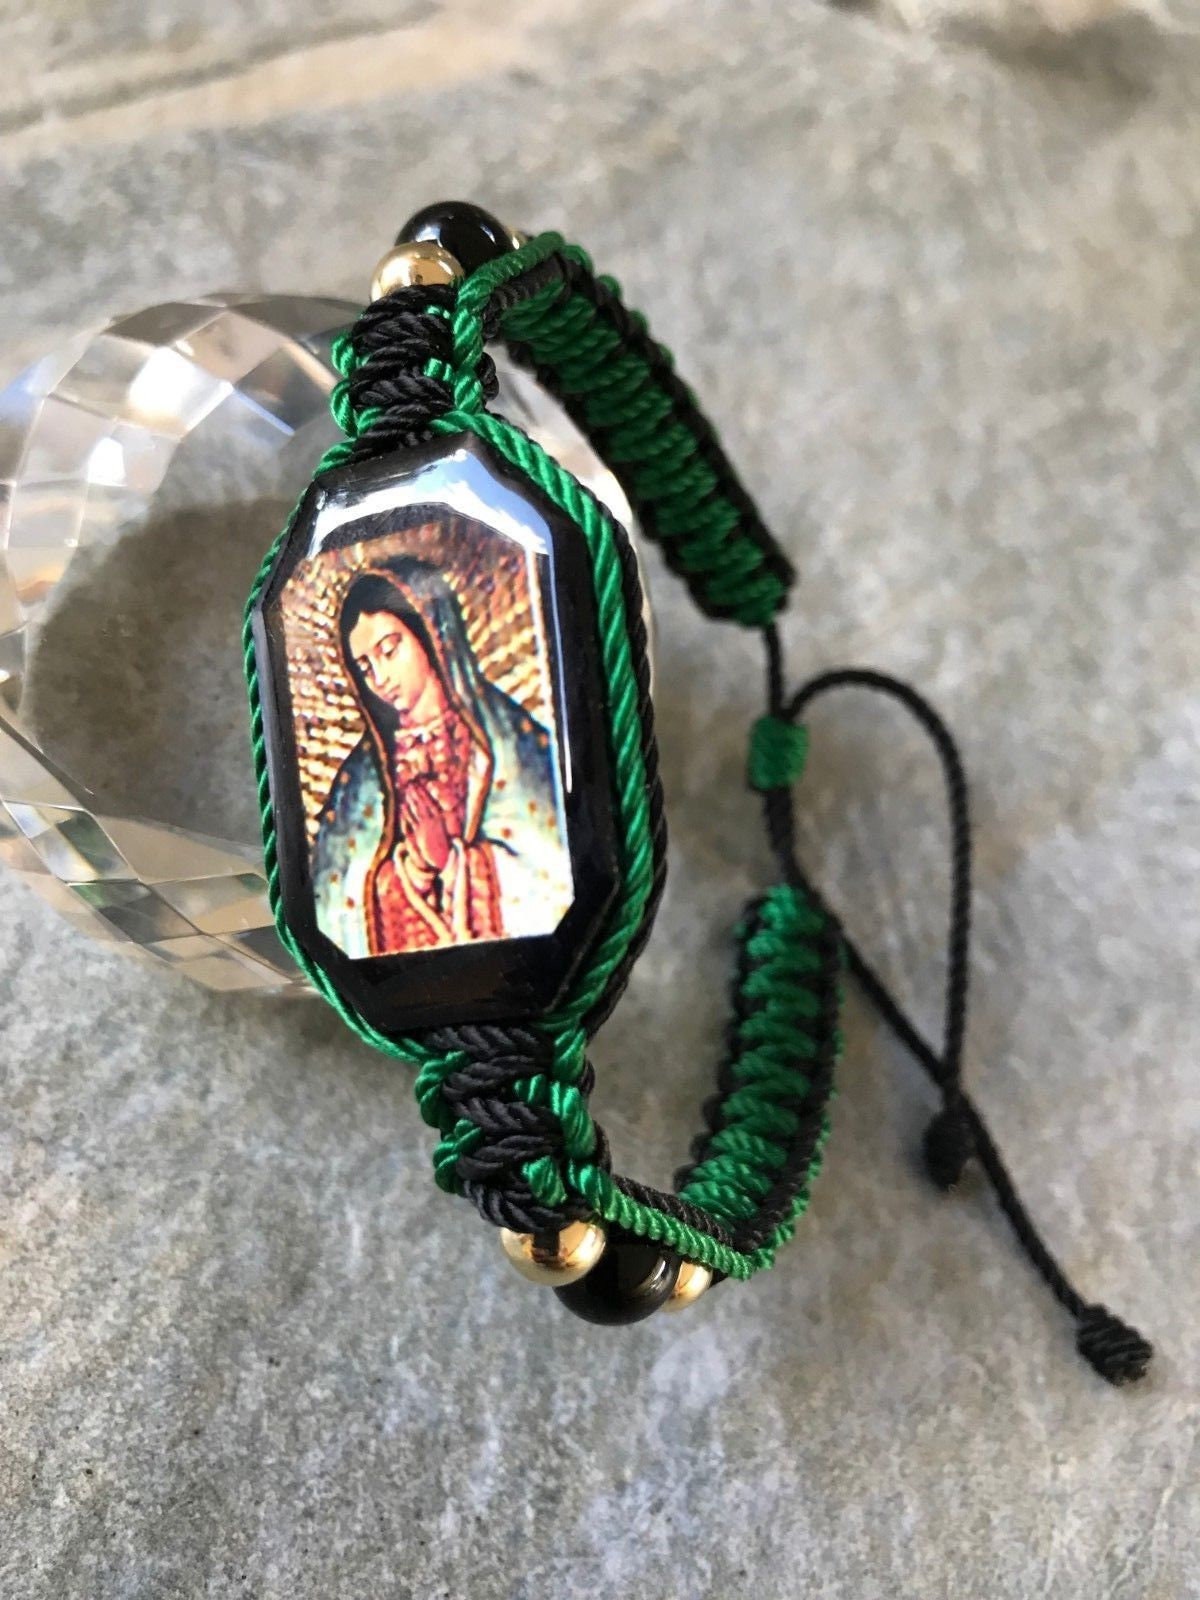 ZNTU 20 Pcs Virgin Mary San Judas Charms for Bracelets Virgencita Virgen de Guadalupe Beads Mexican Jewelry Rosary Pendant